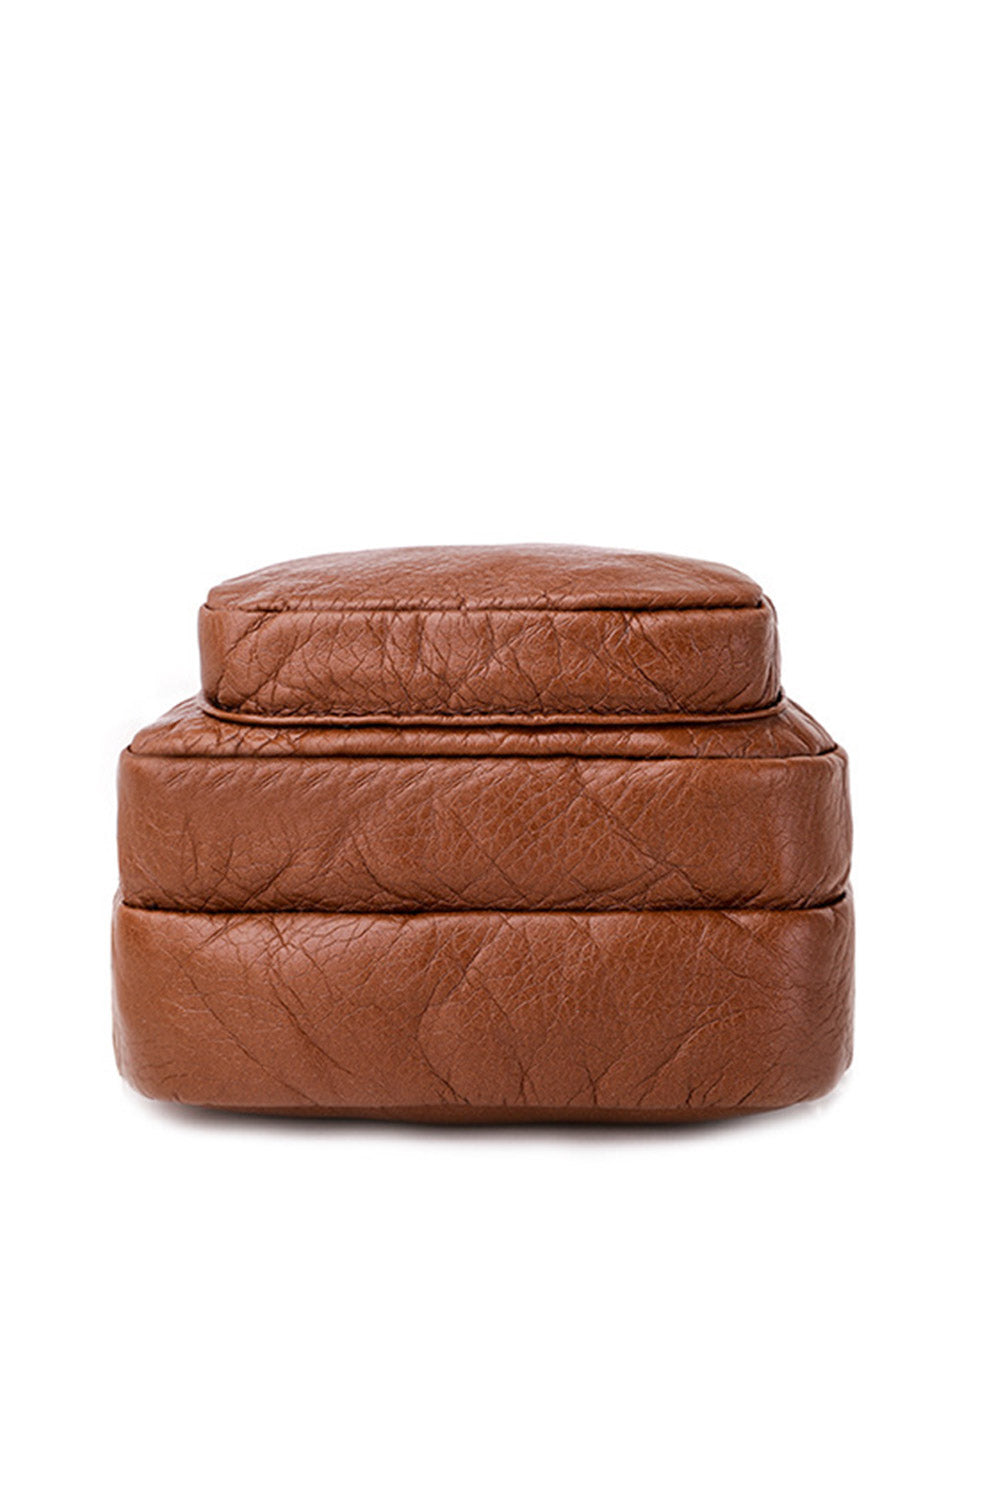 Brown Multi-layer Portable PU Leather Shoulder Messenger Bag